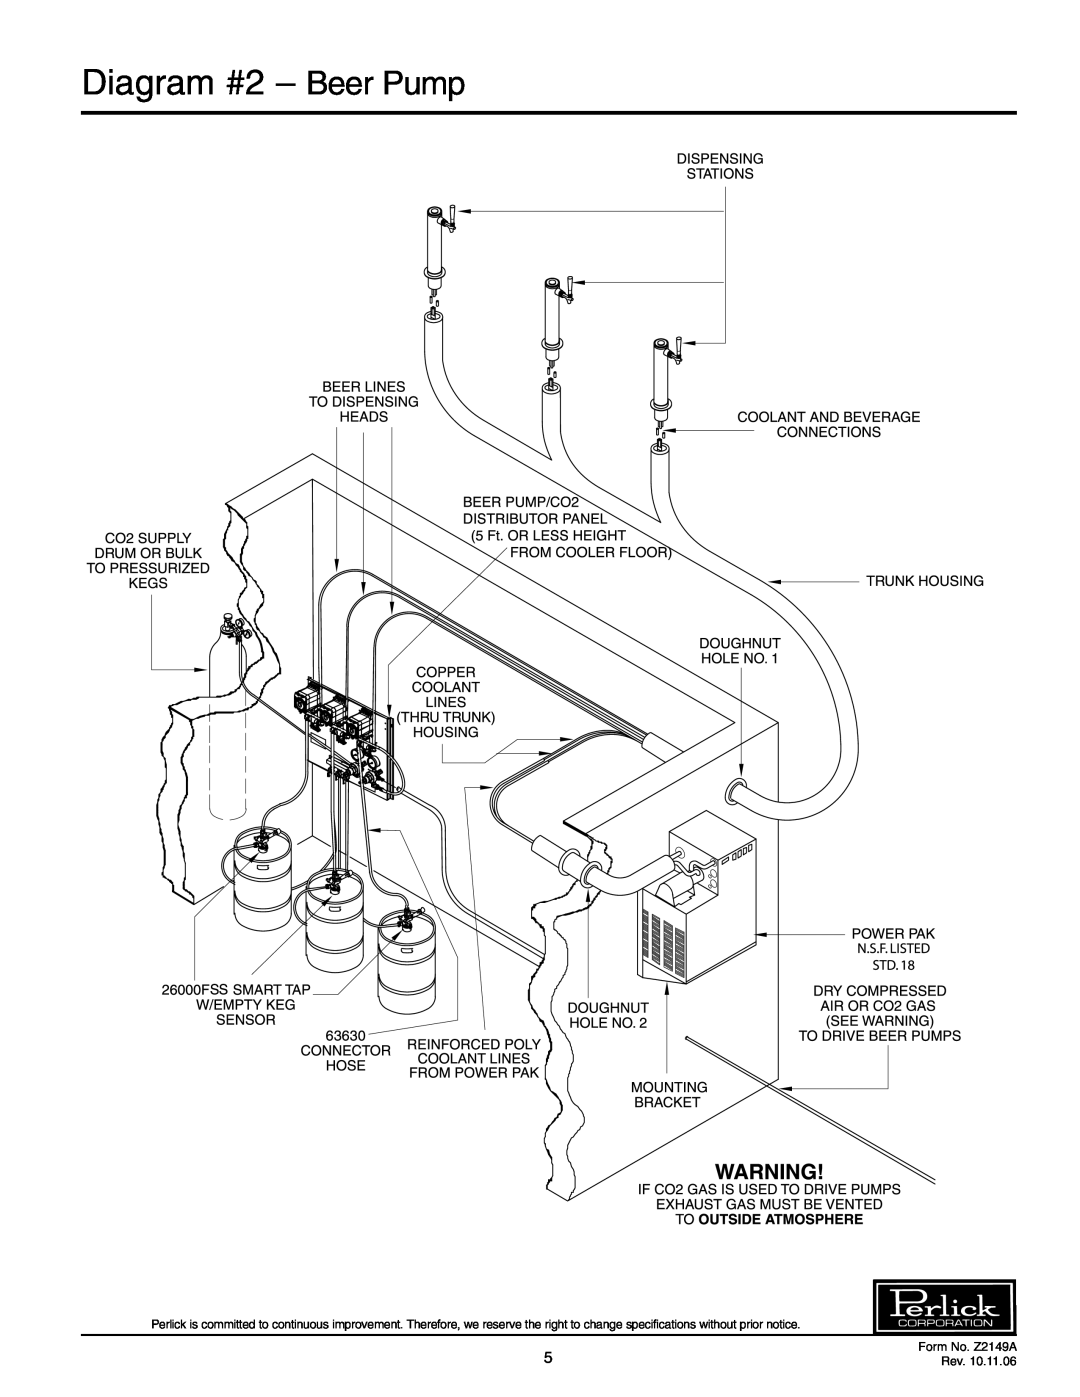 Perlick 66134-2, 66134-1, 66134-4, 66134-3 manual Diagram #2 - Beer Pump, Form No. Z2149A, Rev 